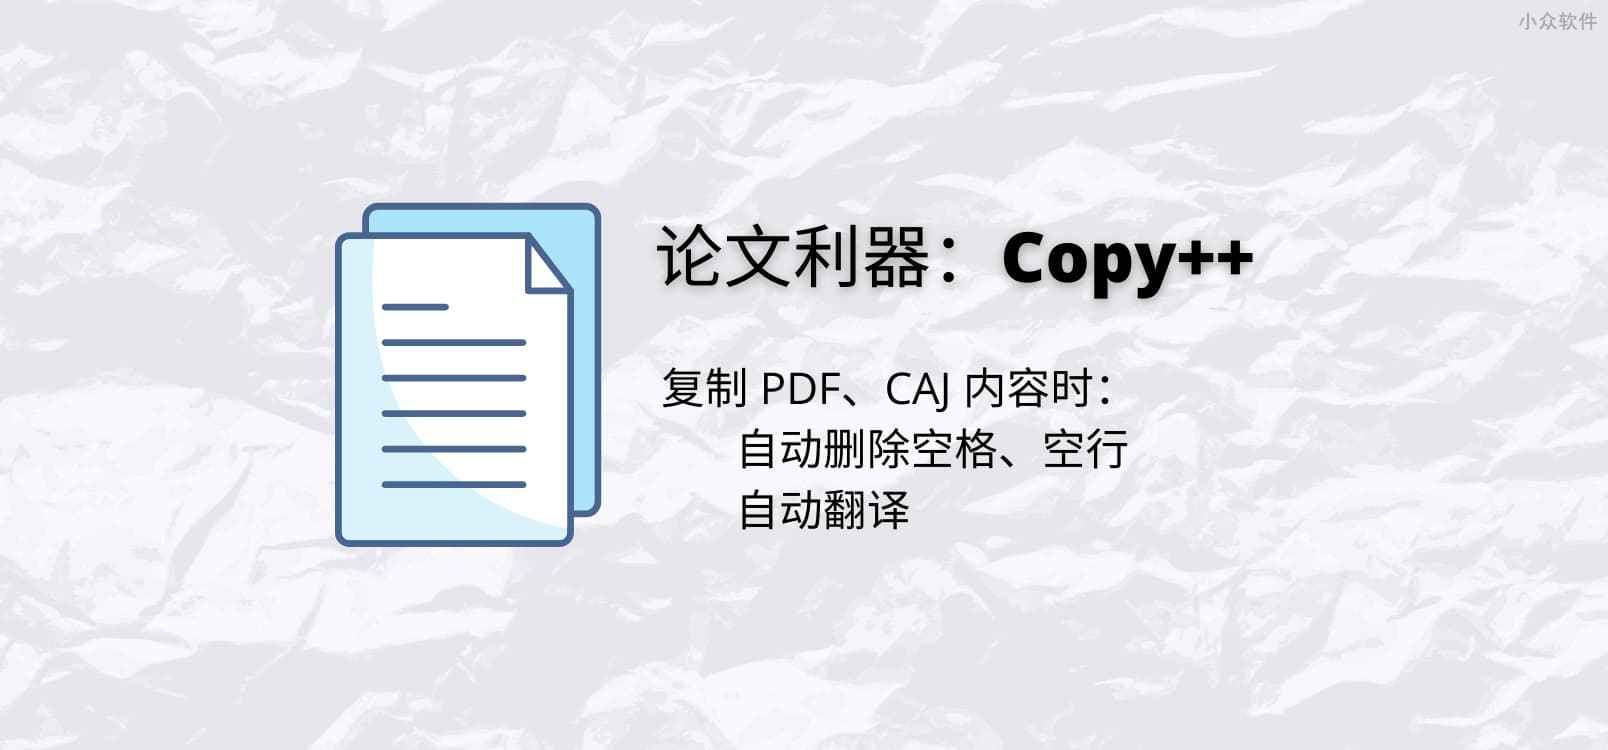 Copy++ 复制 PDF、CAJ 内容时,自动删除空格、空行，以及自动翻译[Win]